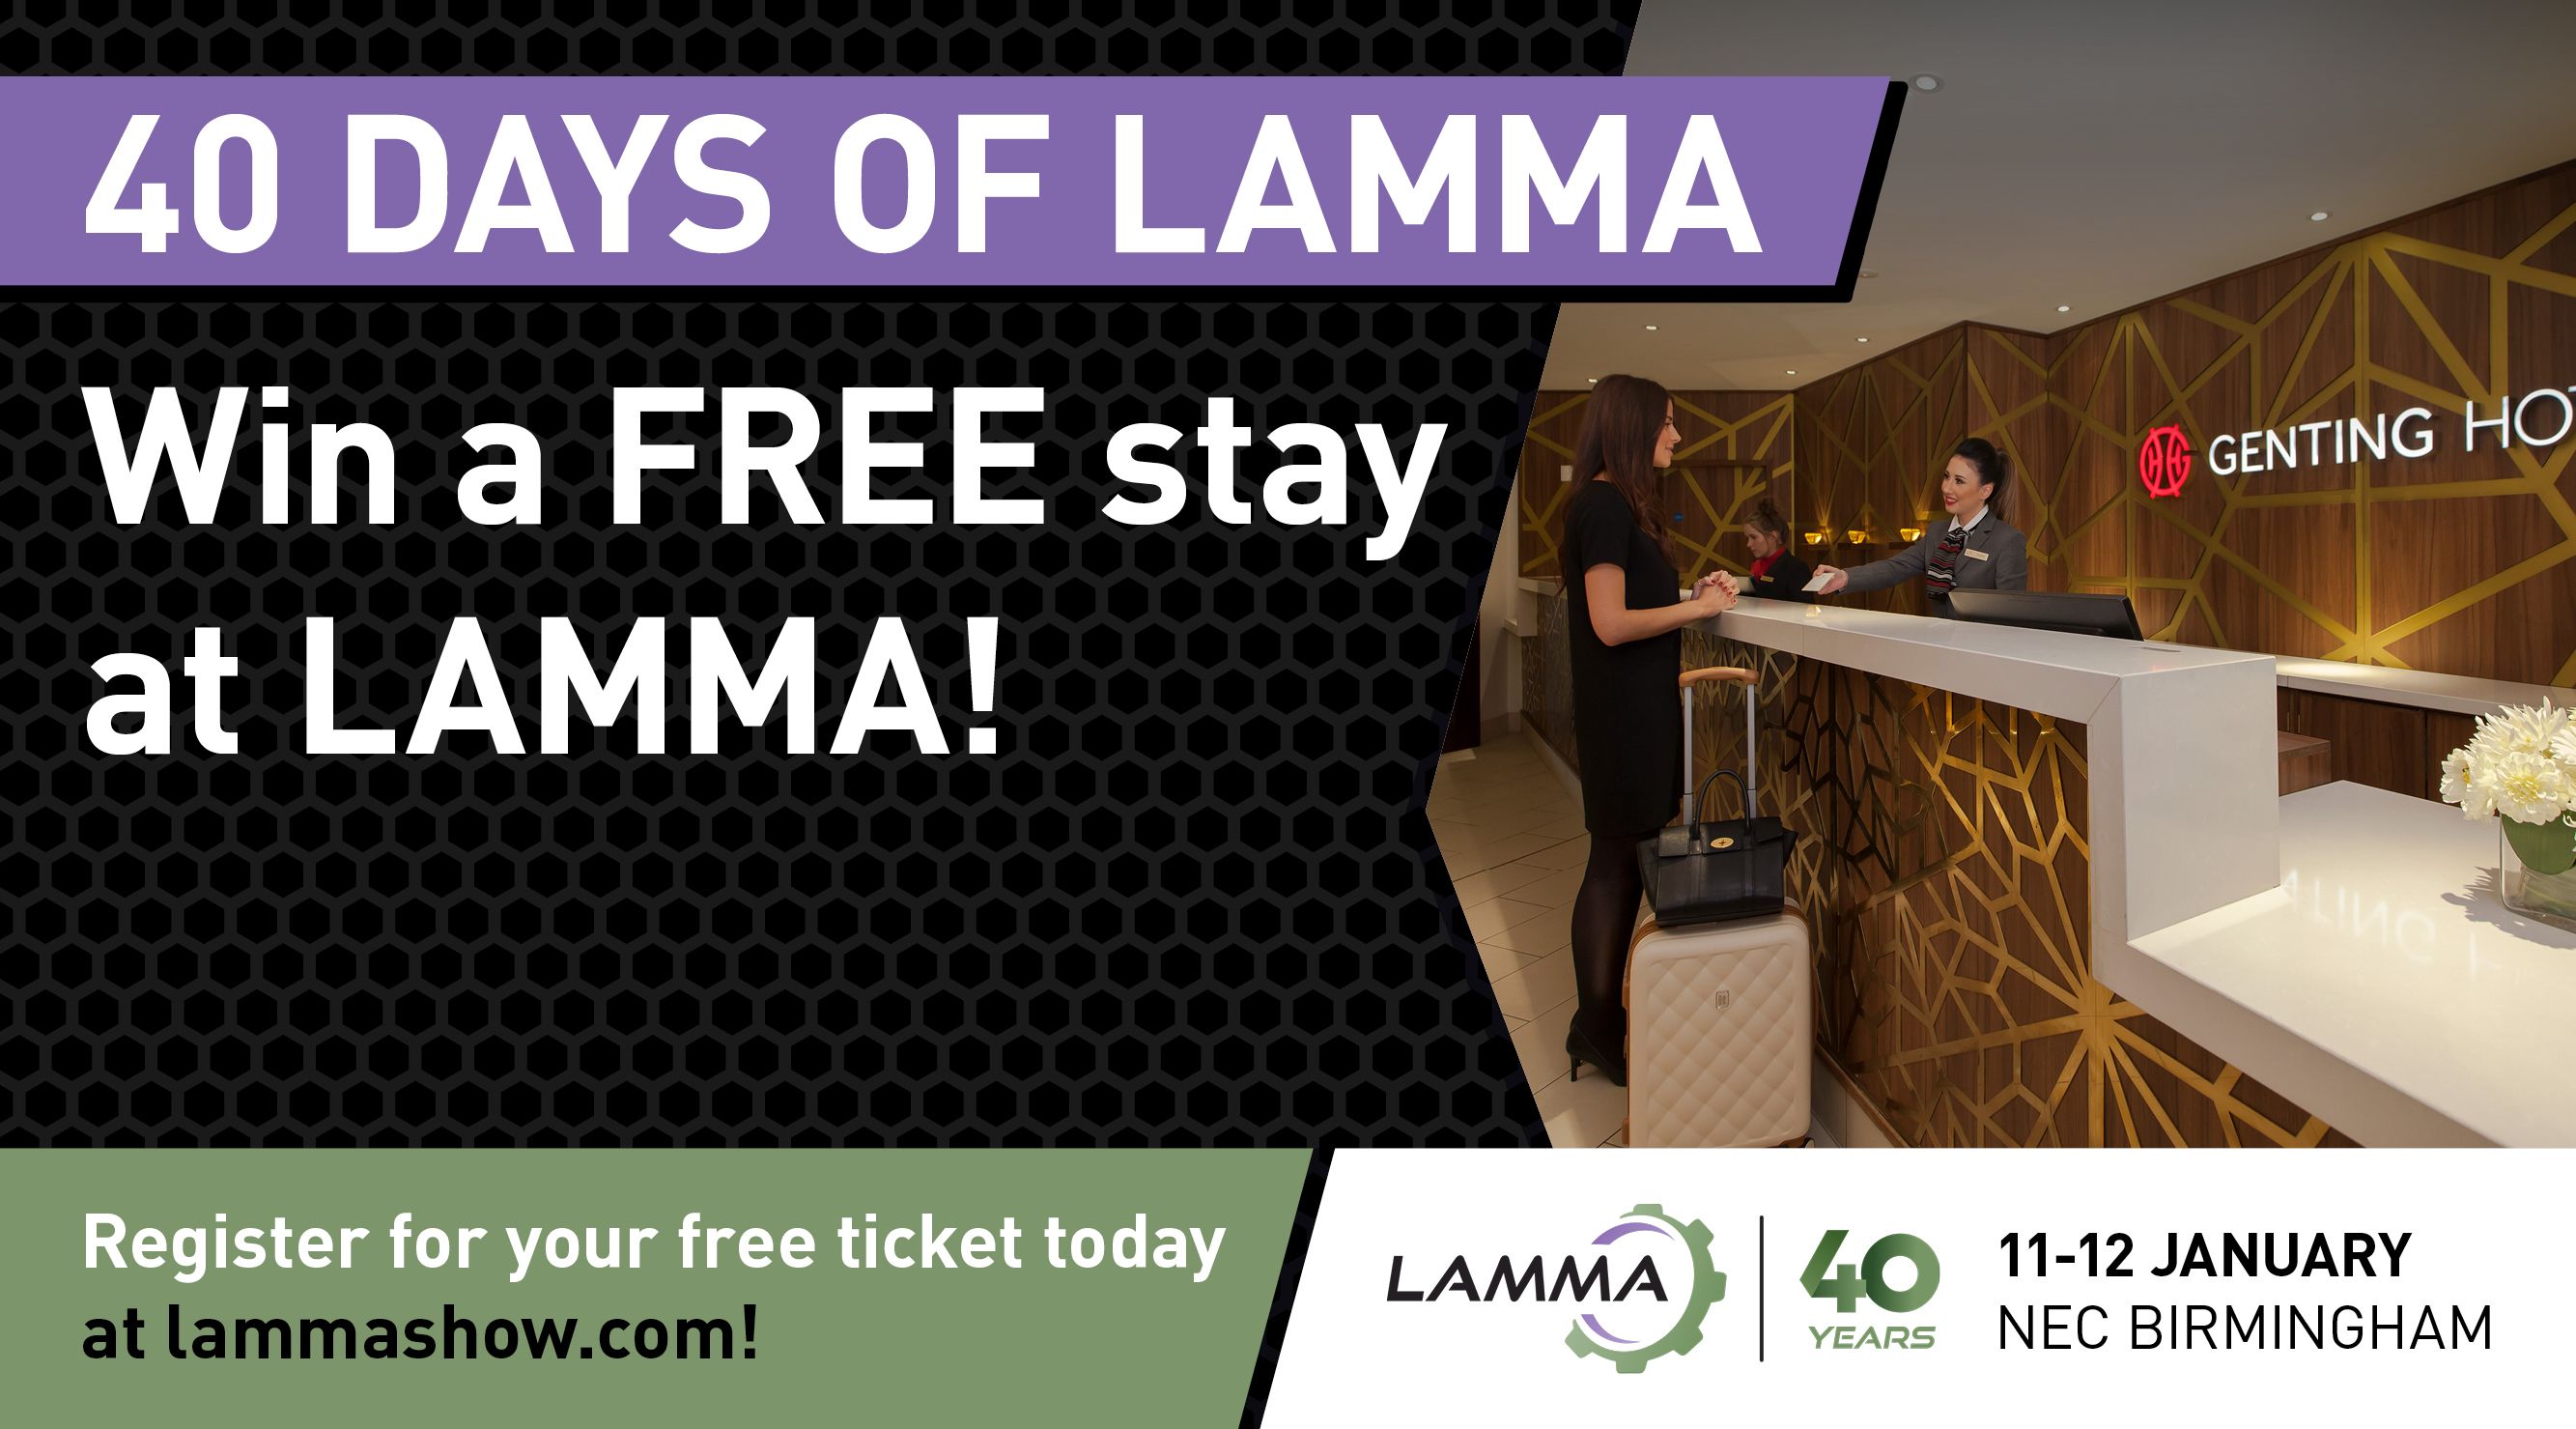 Day 7 - 40 Days of LAMMA